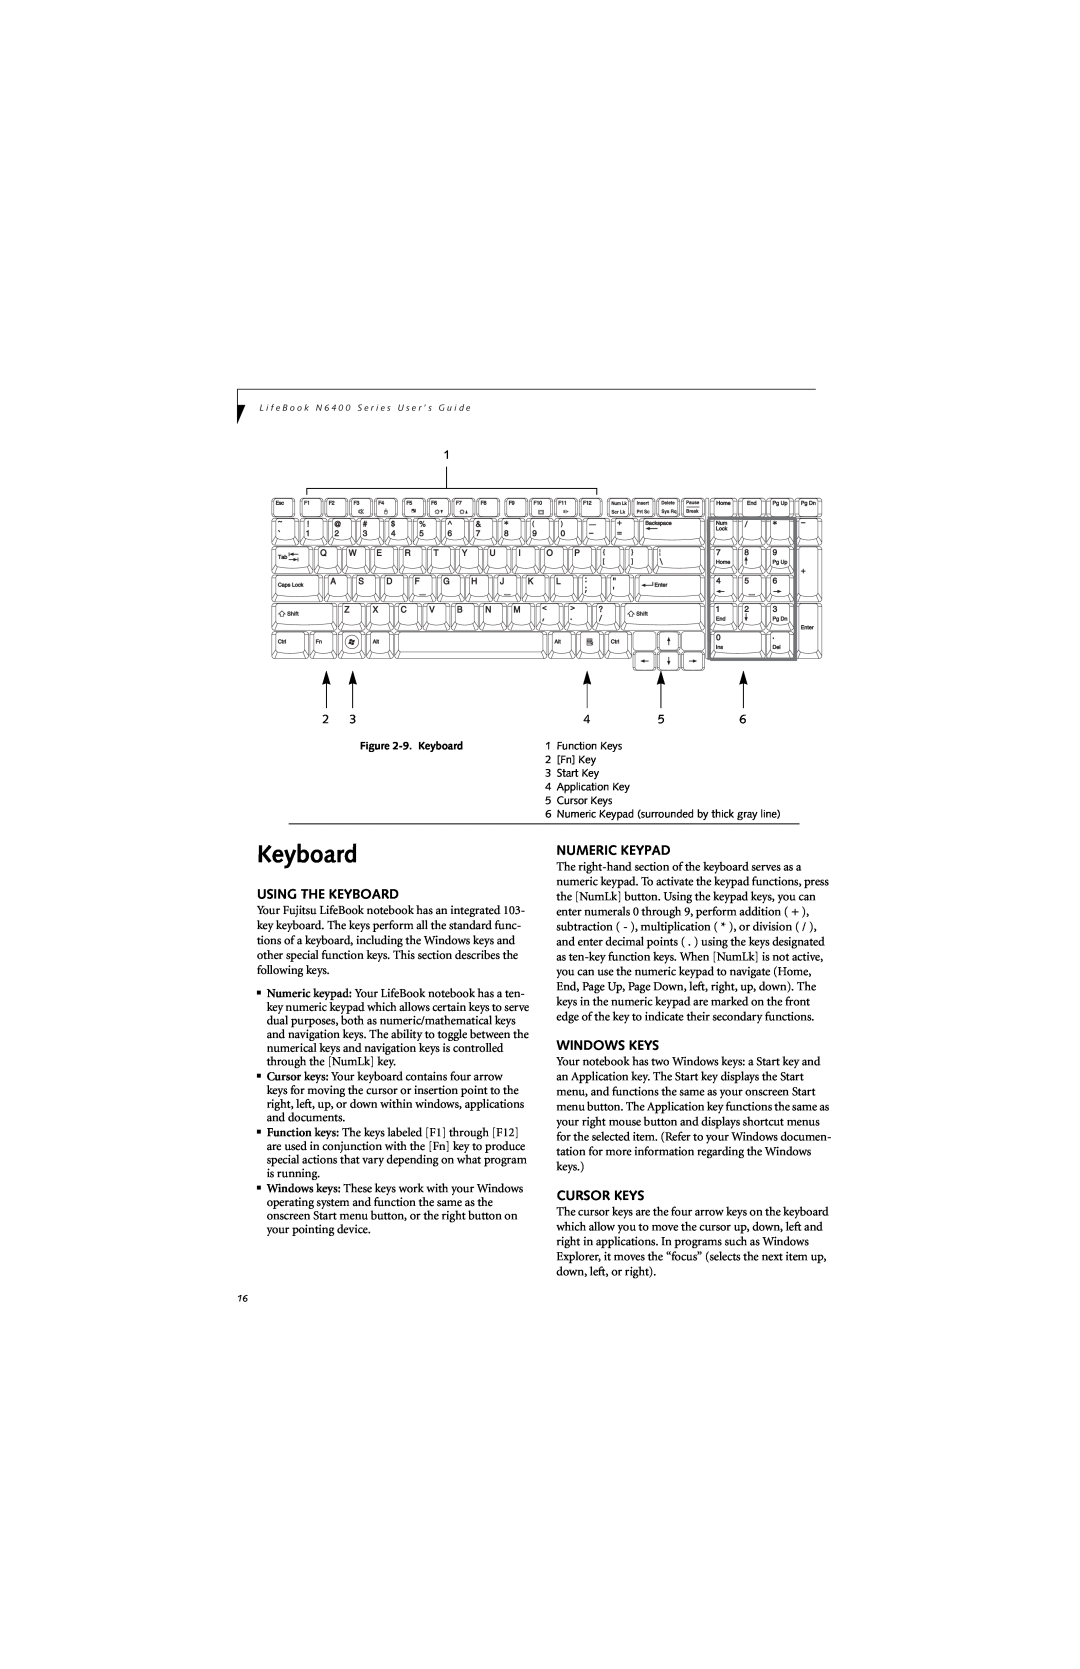 Fujitsu N6420 manual Using The Keyboard, Numeric Keypad, Windows Keys, Cursor Keys 